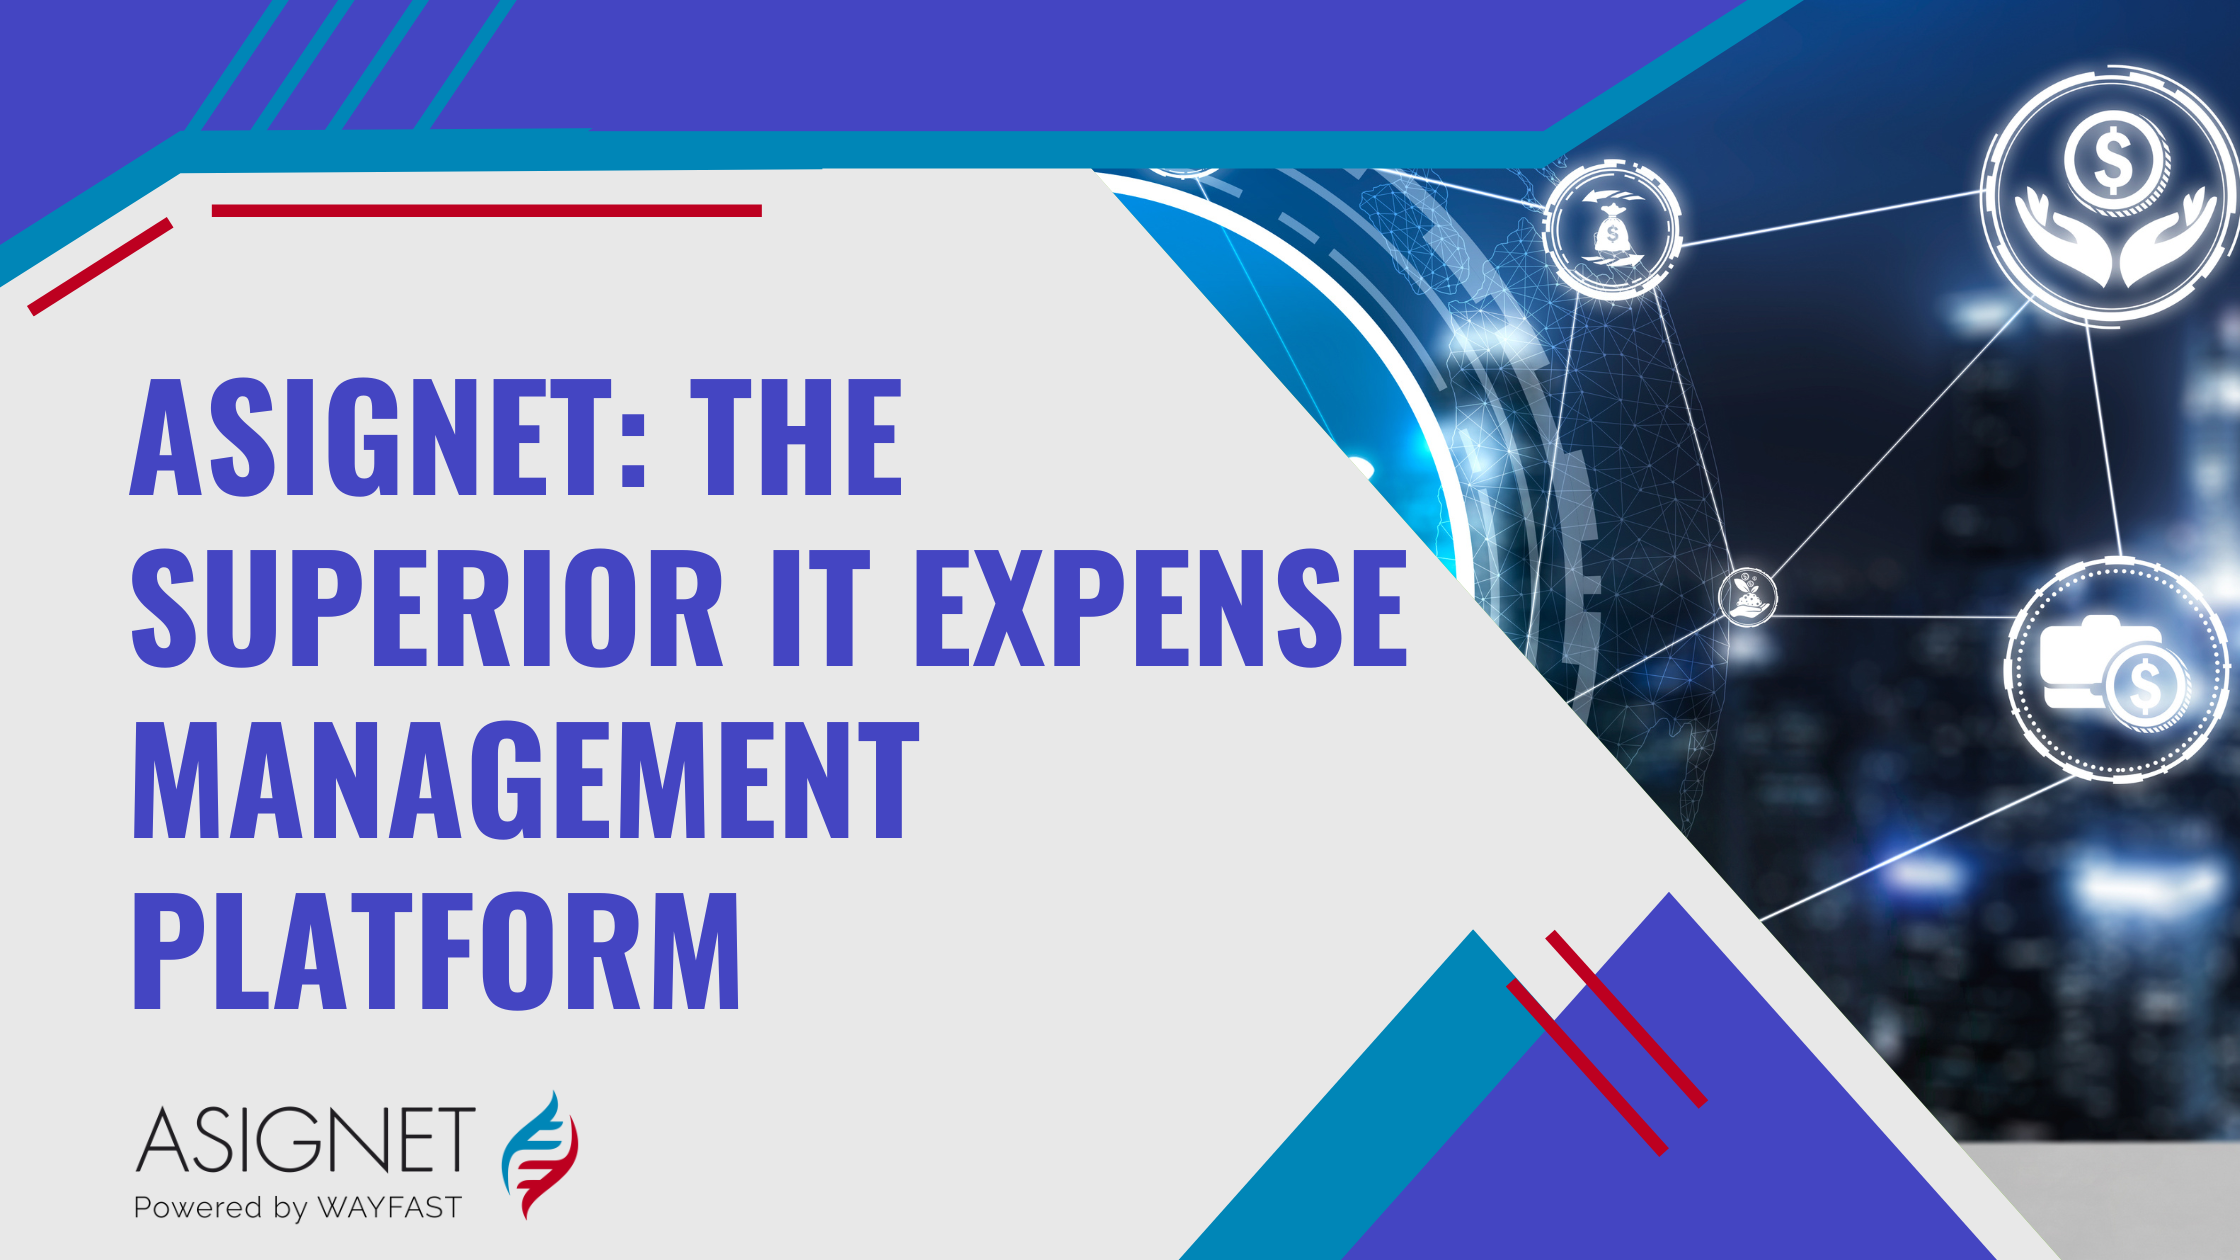 Asignet: The Superior IT Expense Management Platform